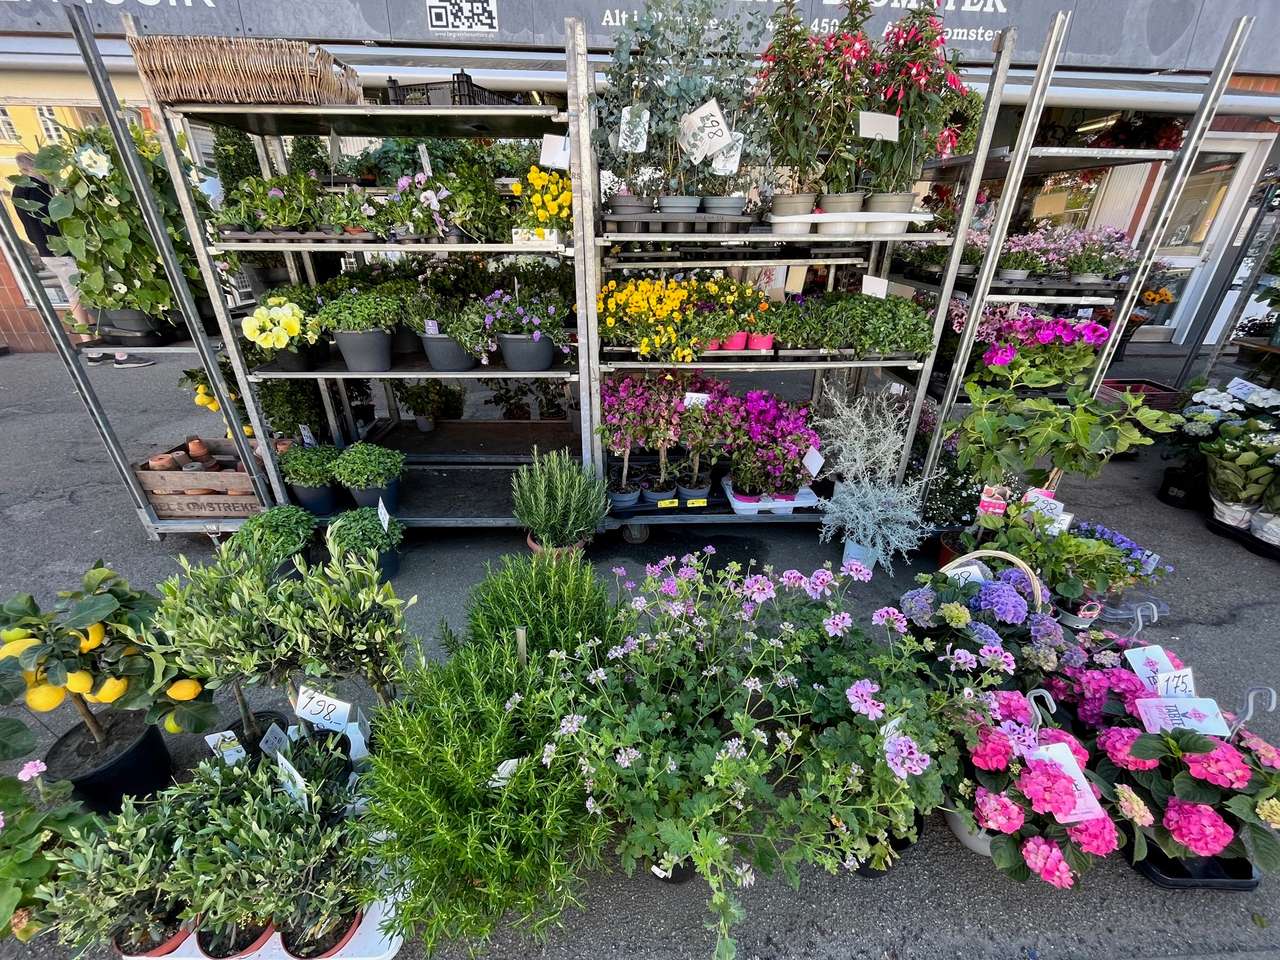 Magazin de flori din Danemarca puzzle online din fotografie